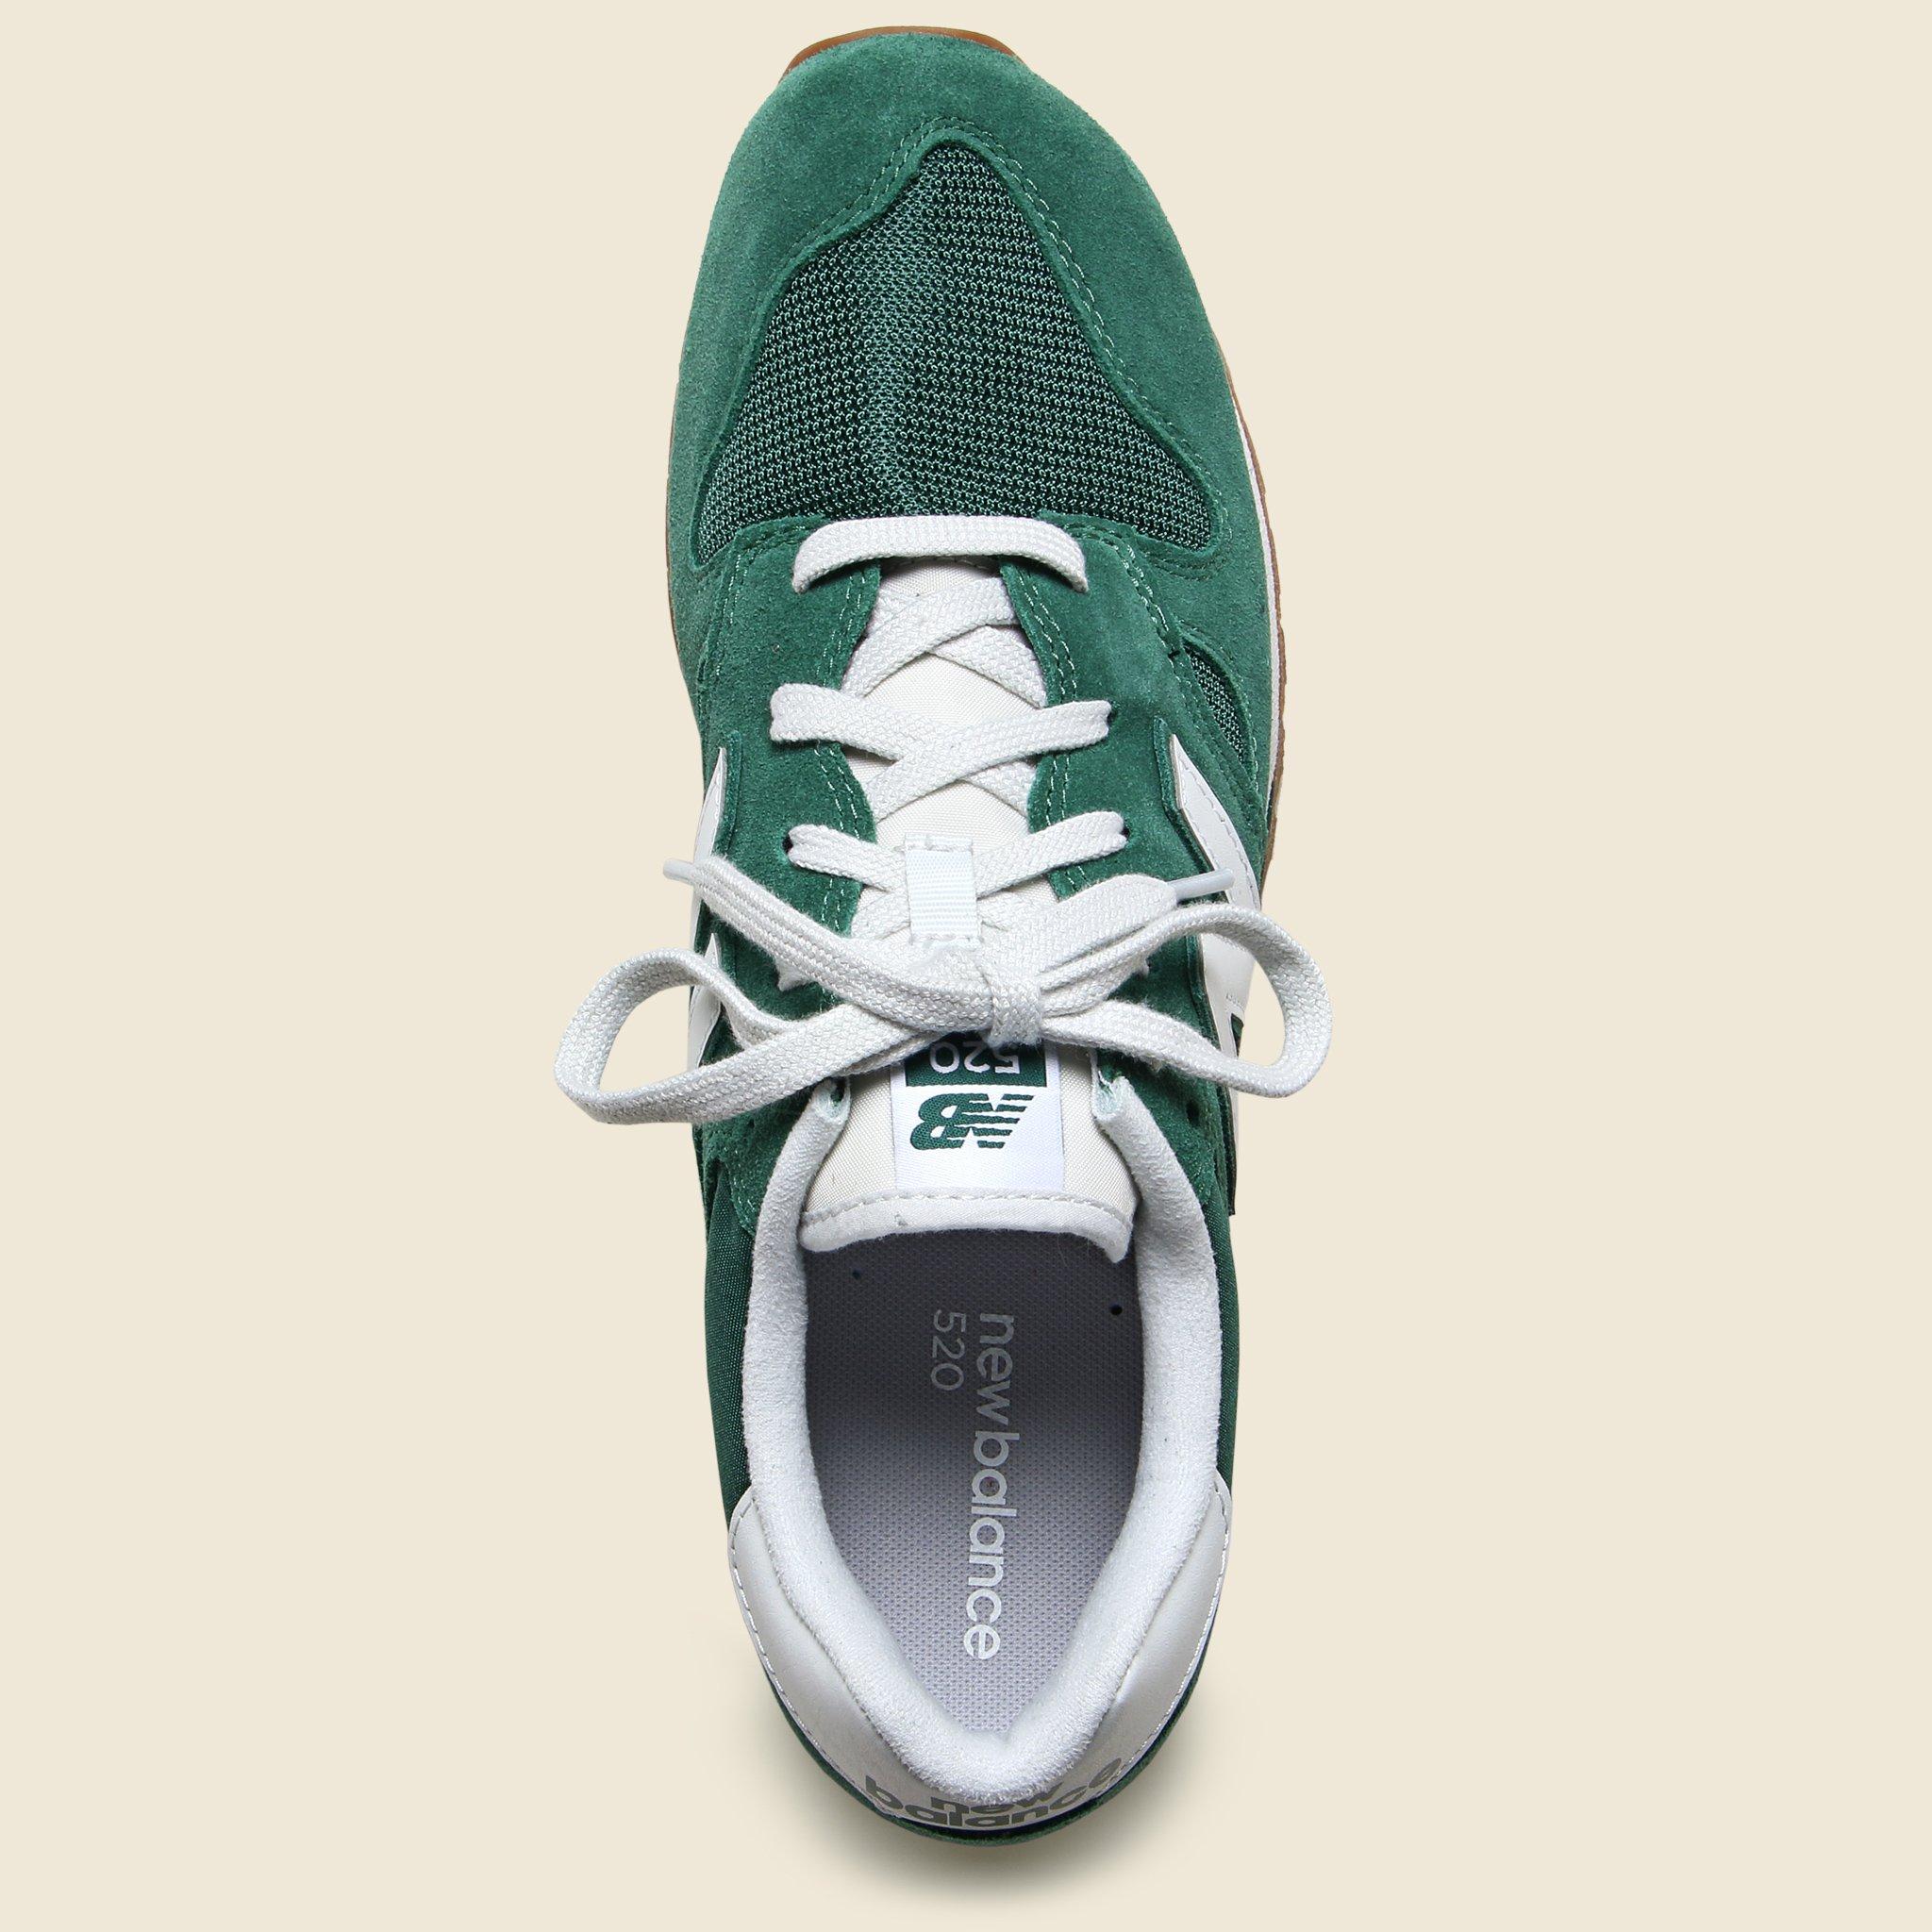 New Balance Suede 520 Sneaker in Green 